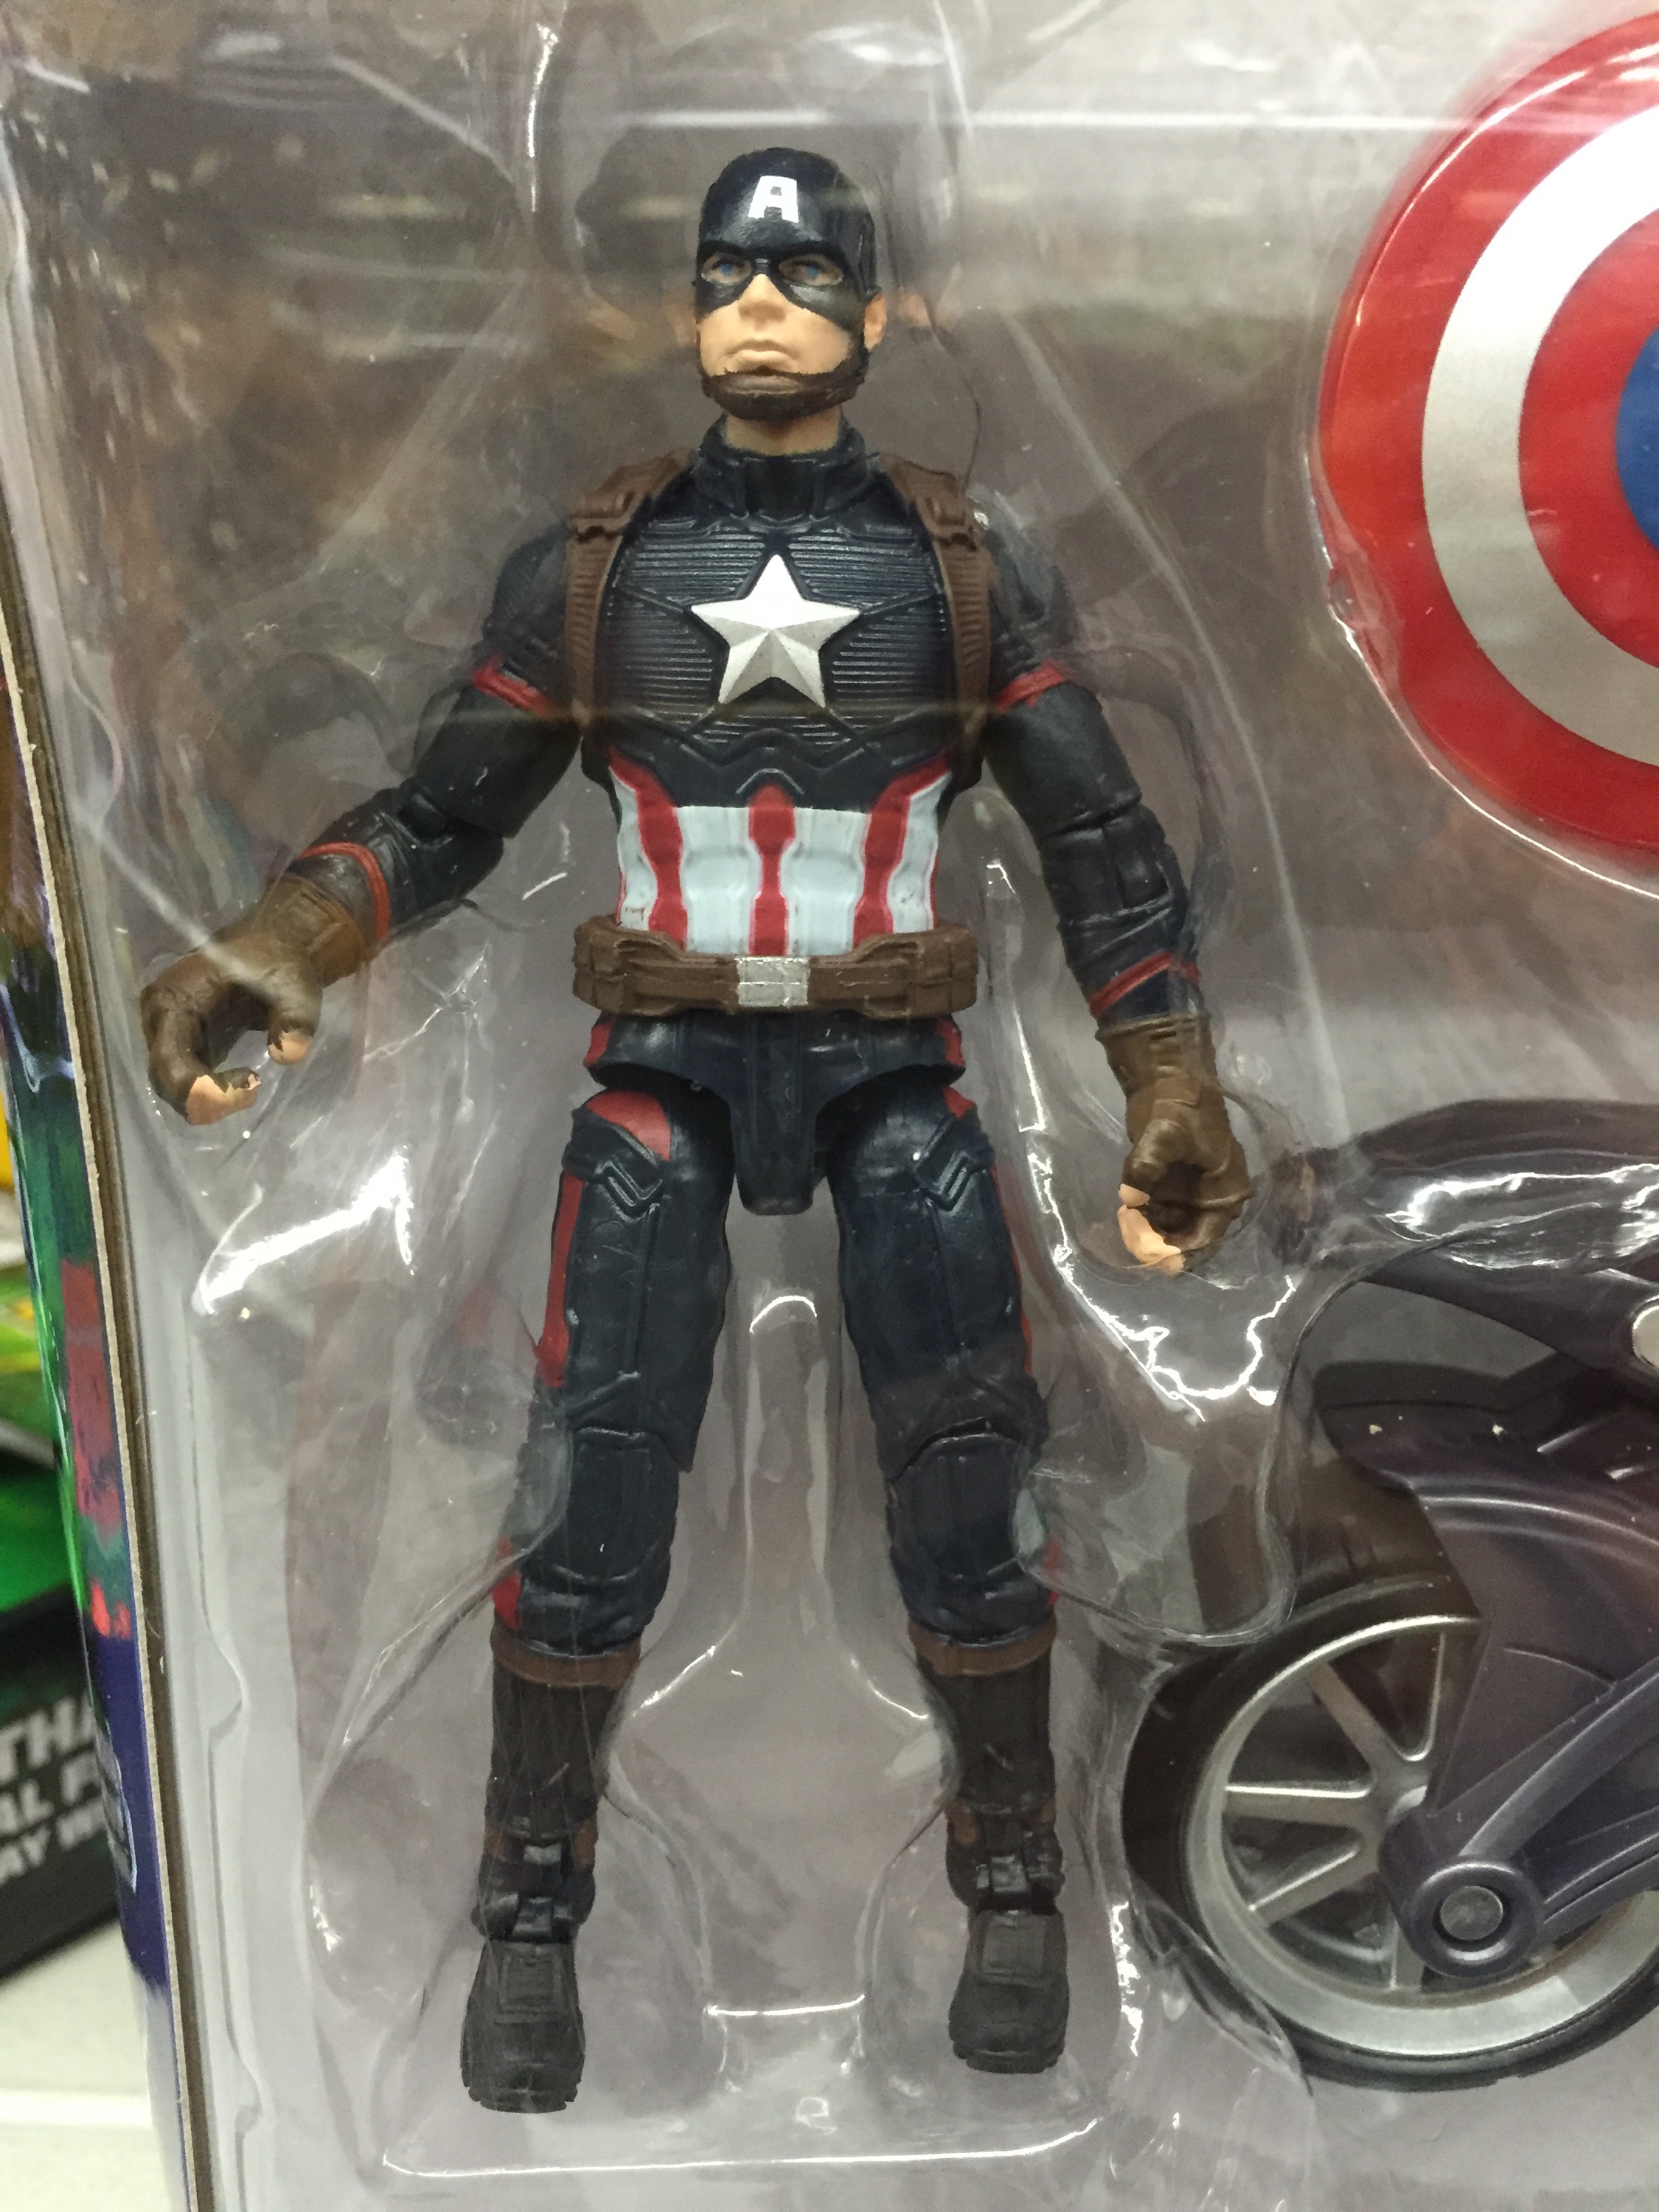 2016 New Captain America Civil War Marvel Legends Man Action Figure Soldier Cool 